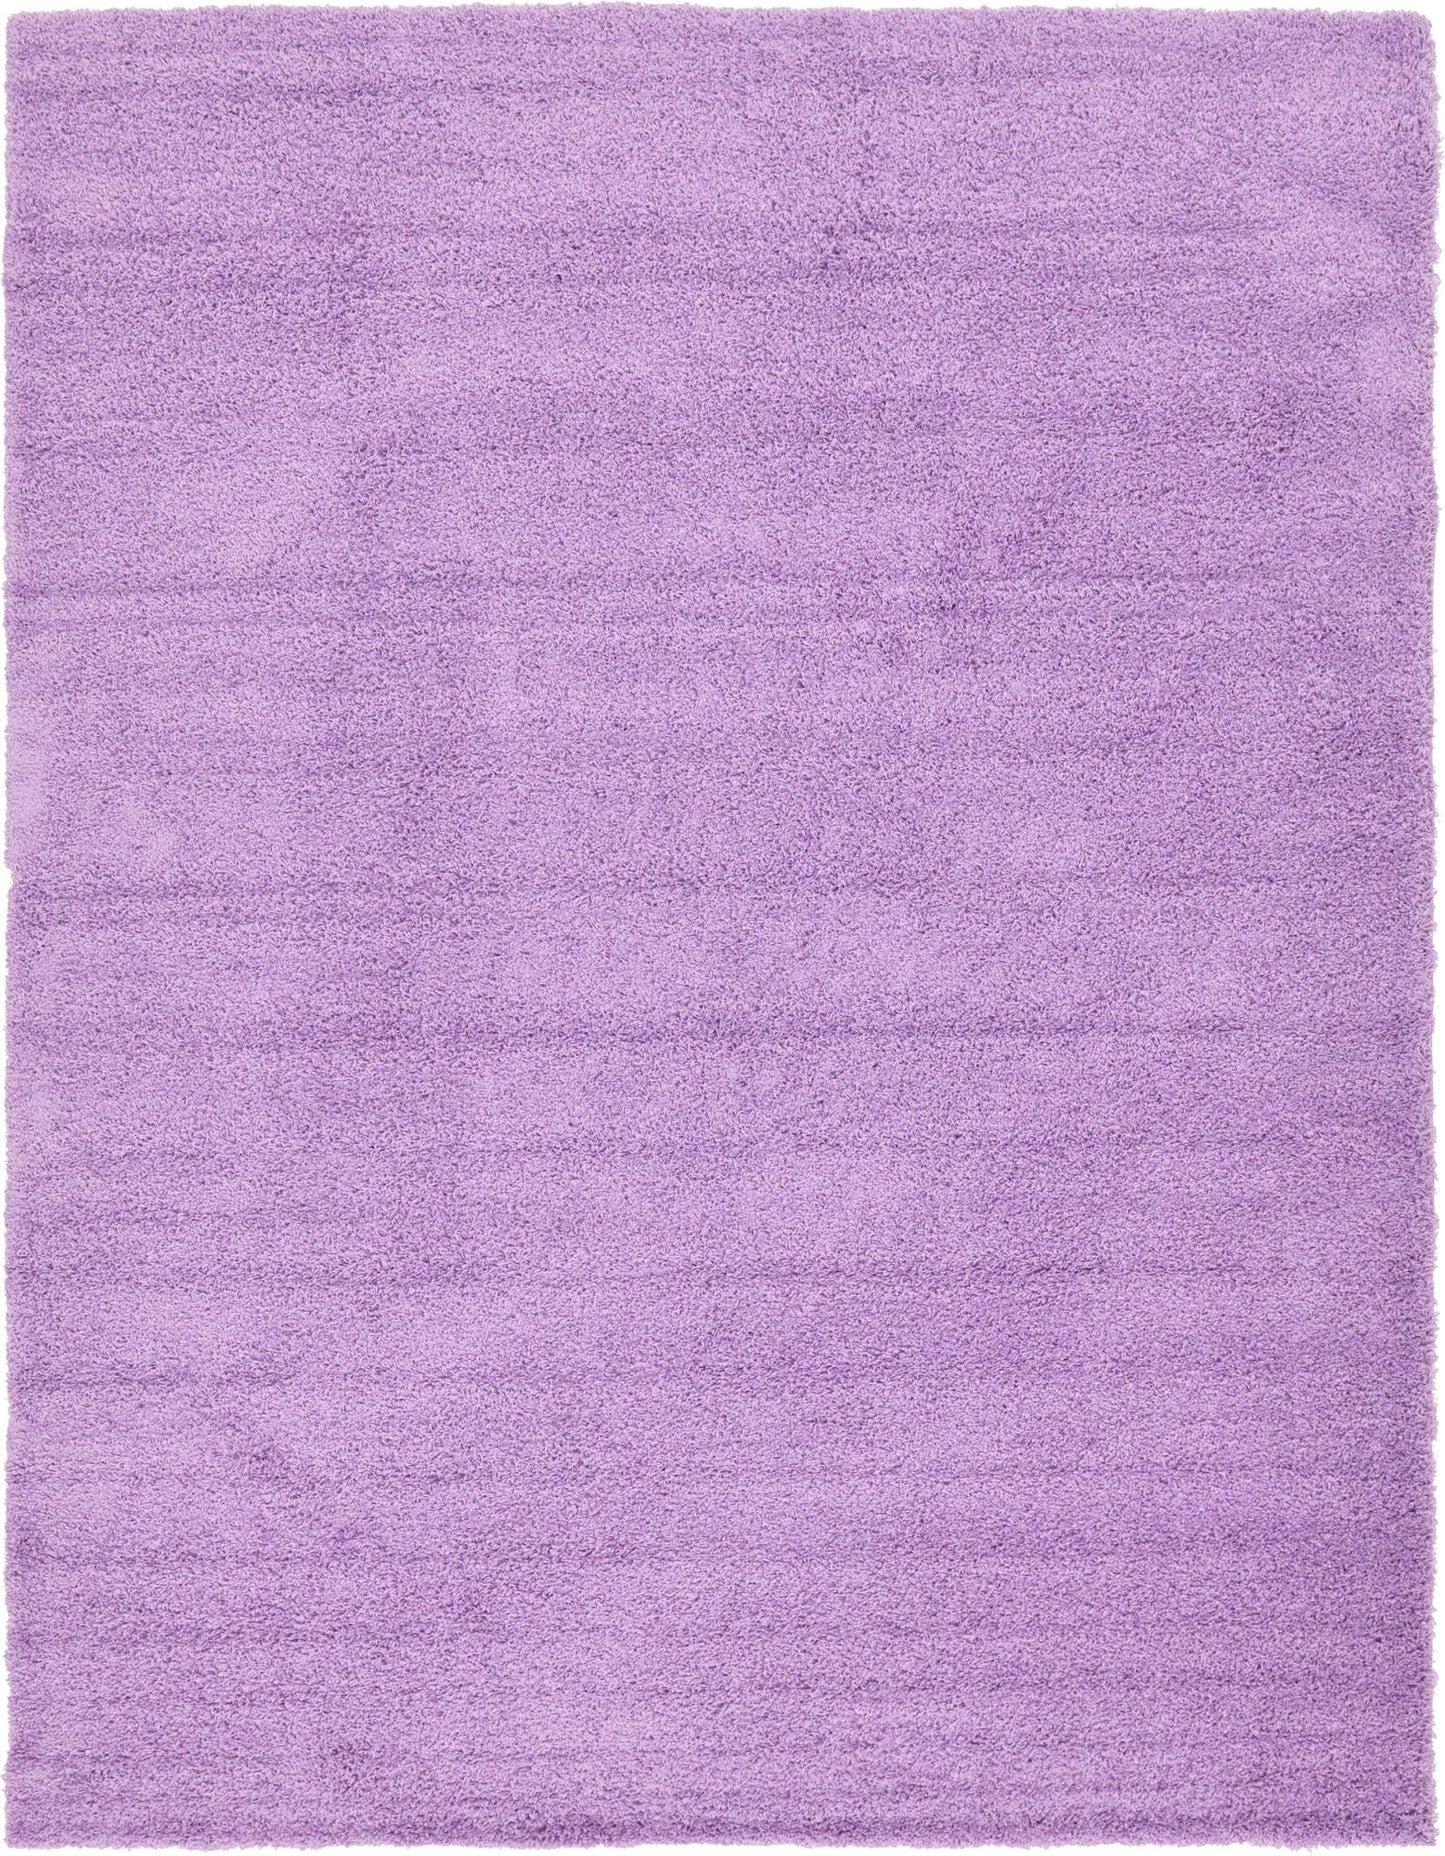 Solo Lilac Shag Rug 10 x 13ft Luxurious Fluffy Carpet